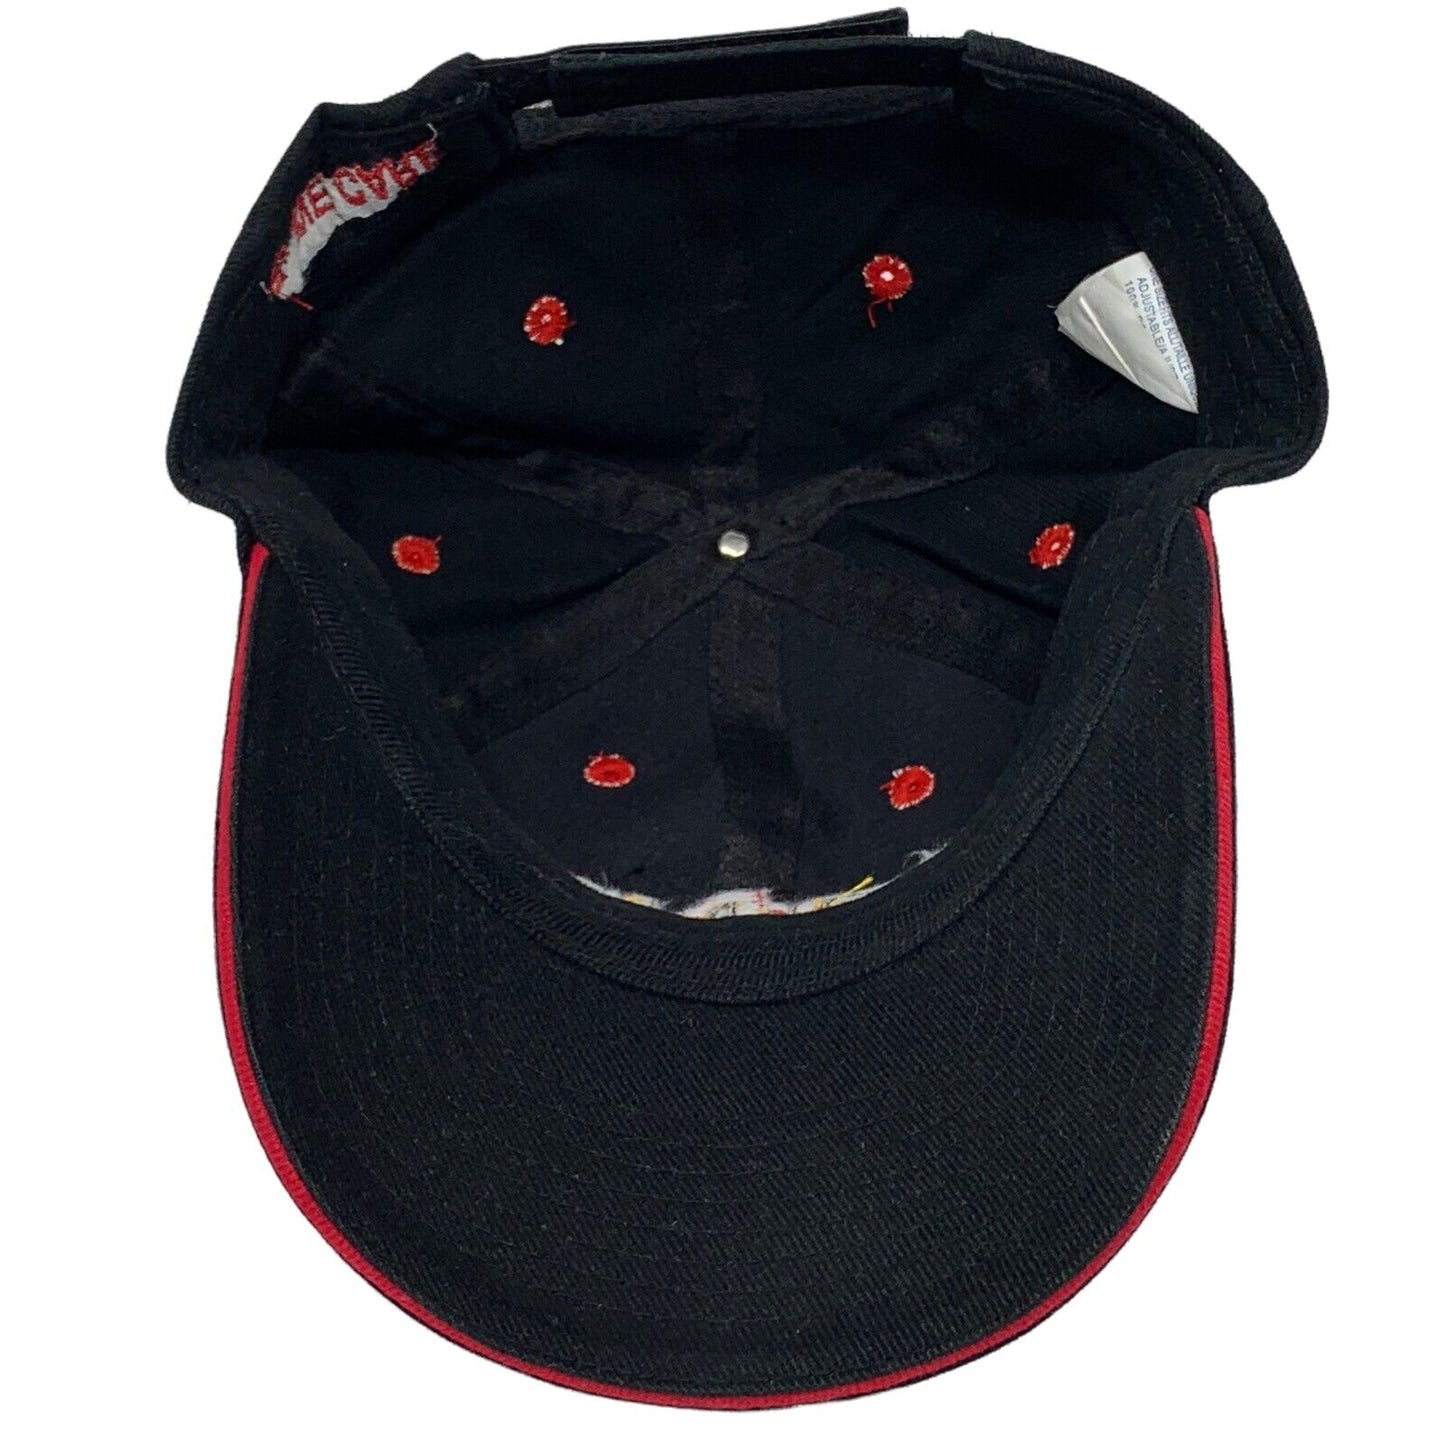 FDNY Fire Department Dept New York Strapback Hat Black 6 Six Panel Baseball Cap